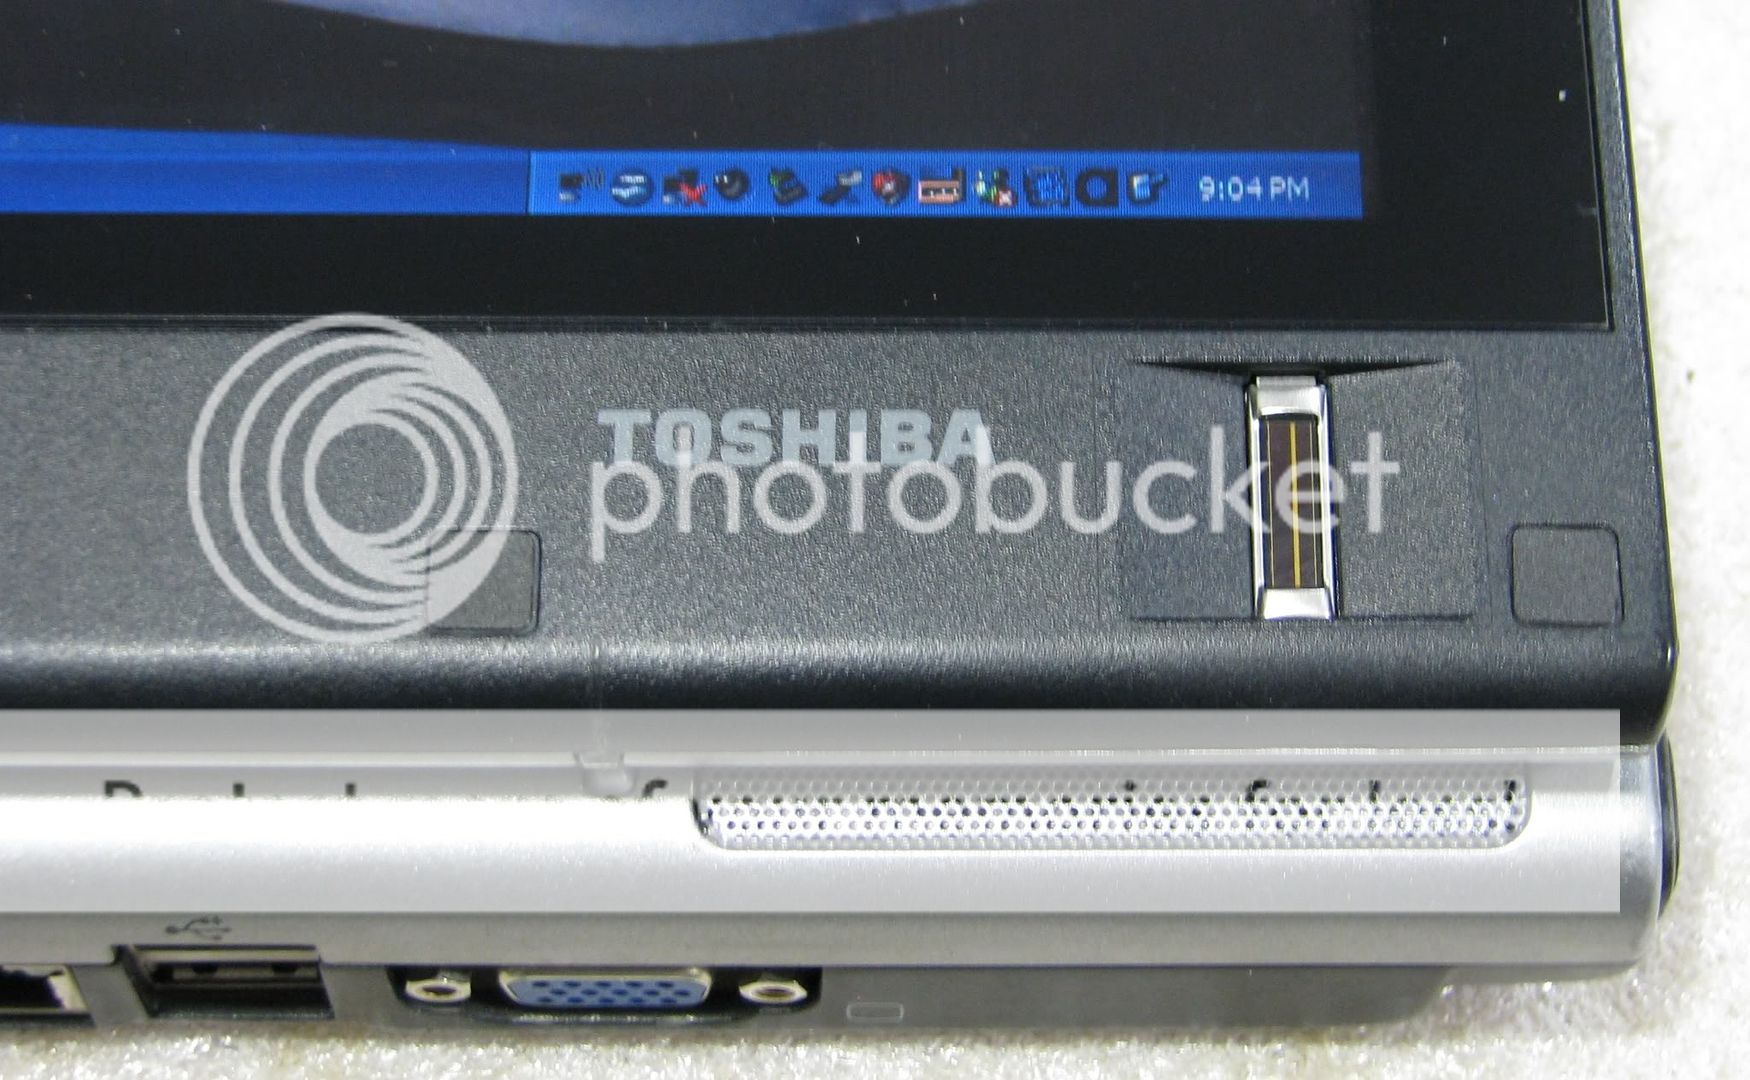 TOSHIBA TECRA M7 TABLET CORE DUO 1.66GHZ 1GB 80GB DVD TOUCHSCREEN 